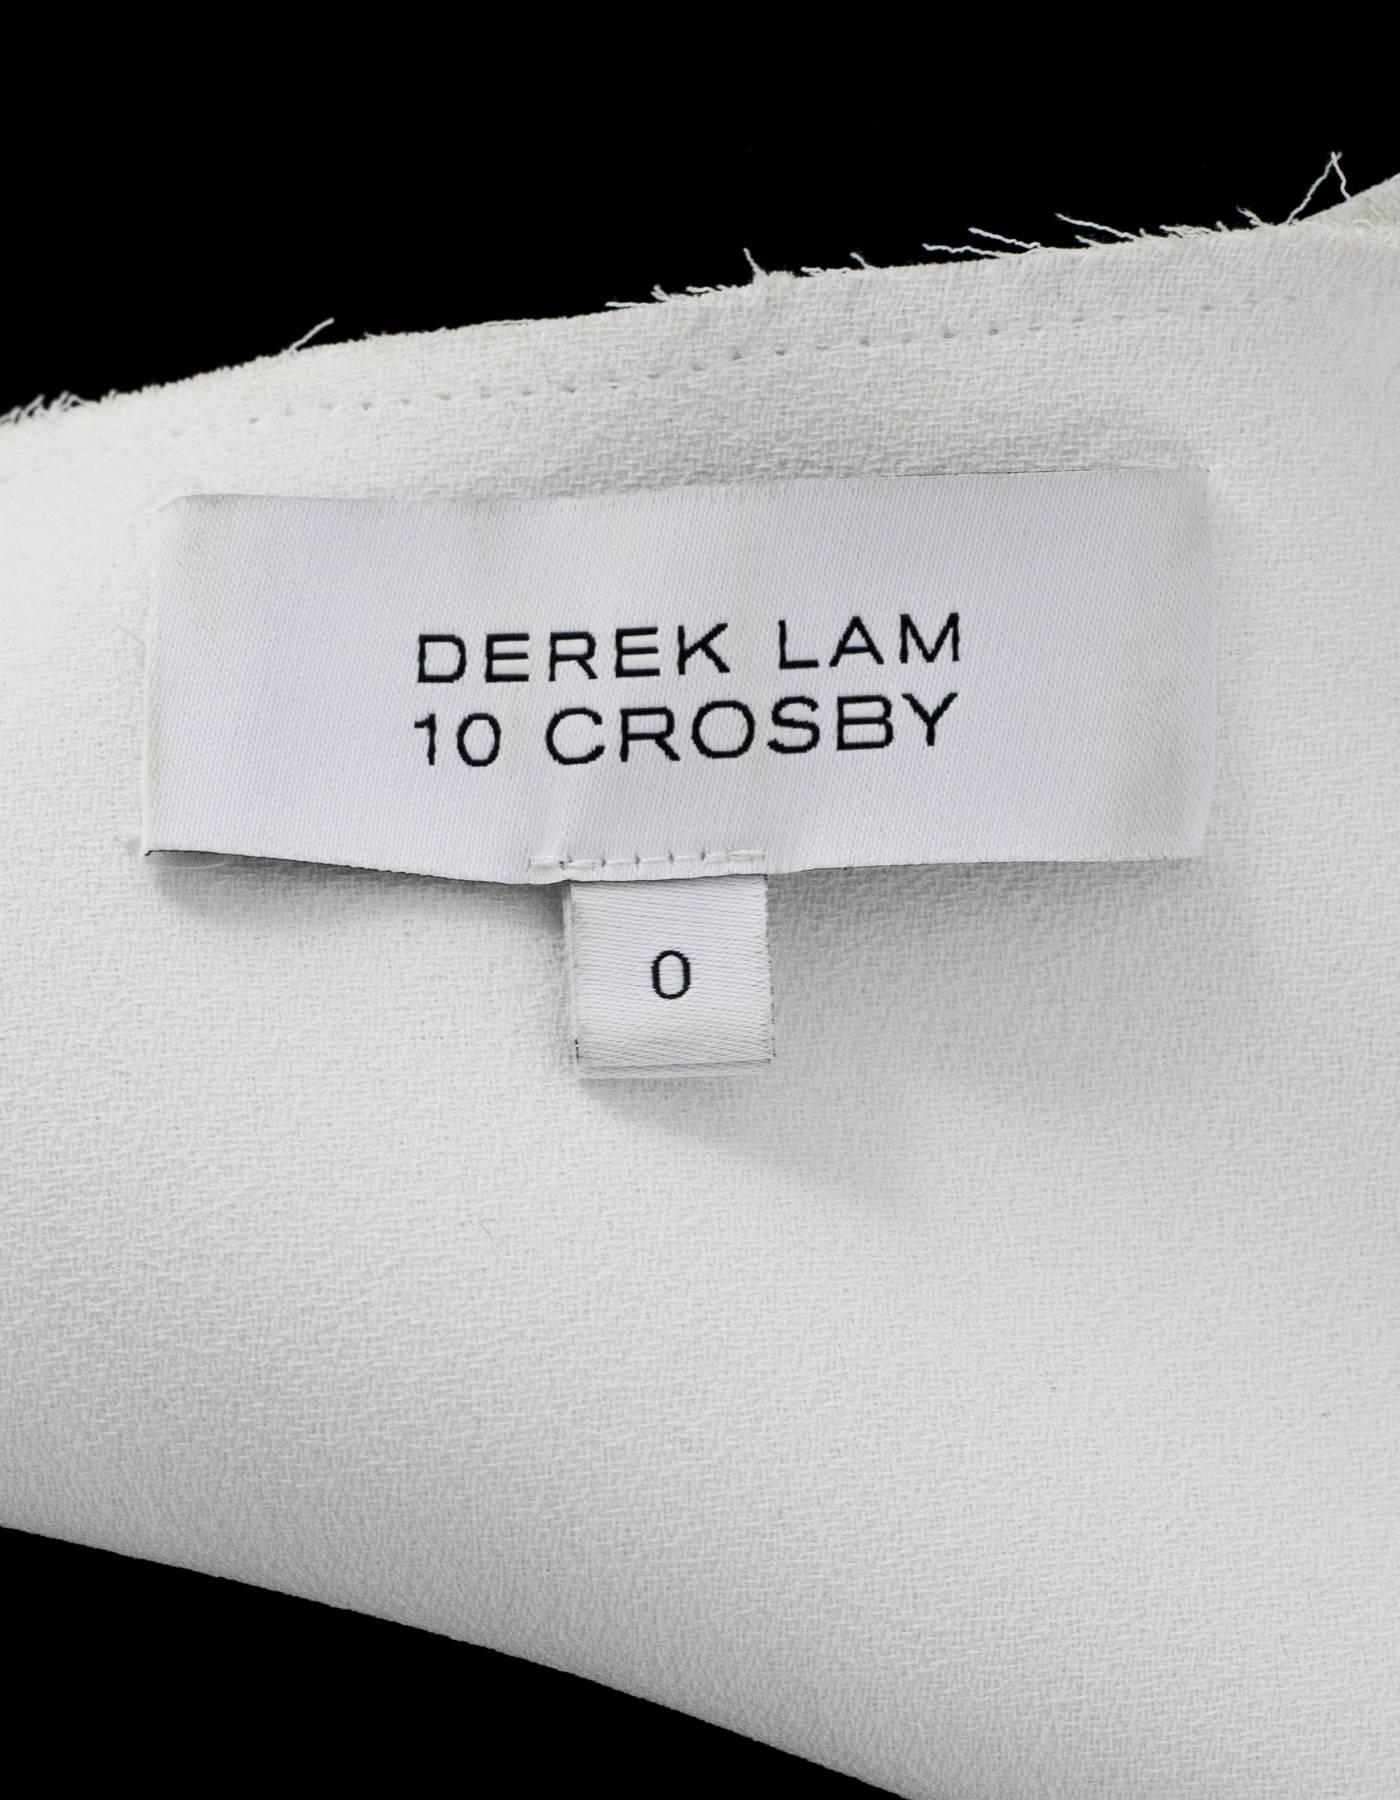 Derek Lam 10 Crosby Black & White Peplum Dress Sz 0 In Excellent Condition In New York, NY